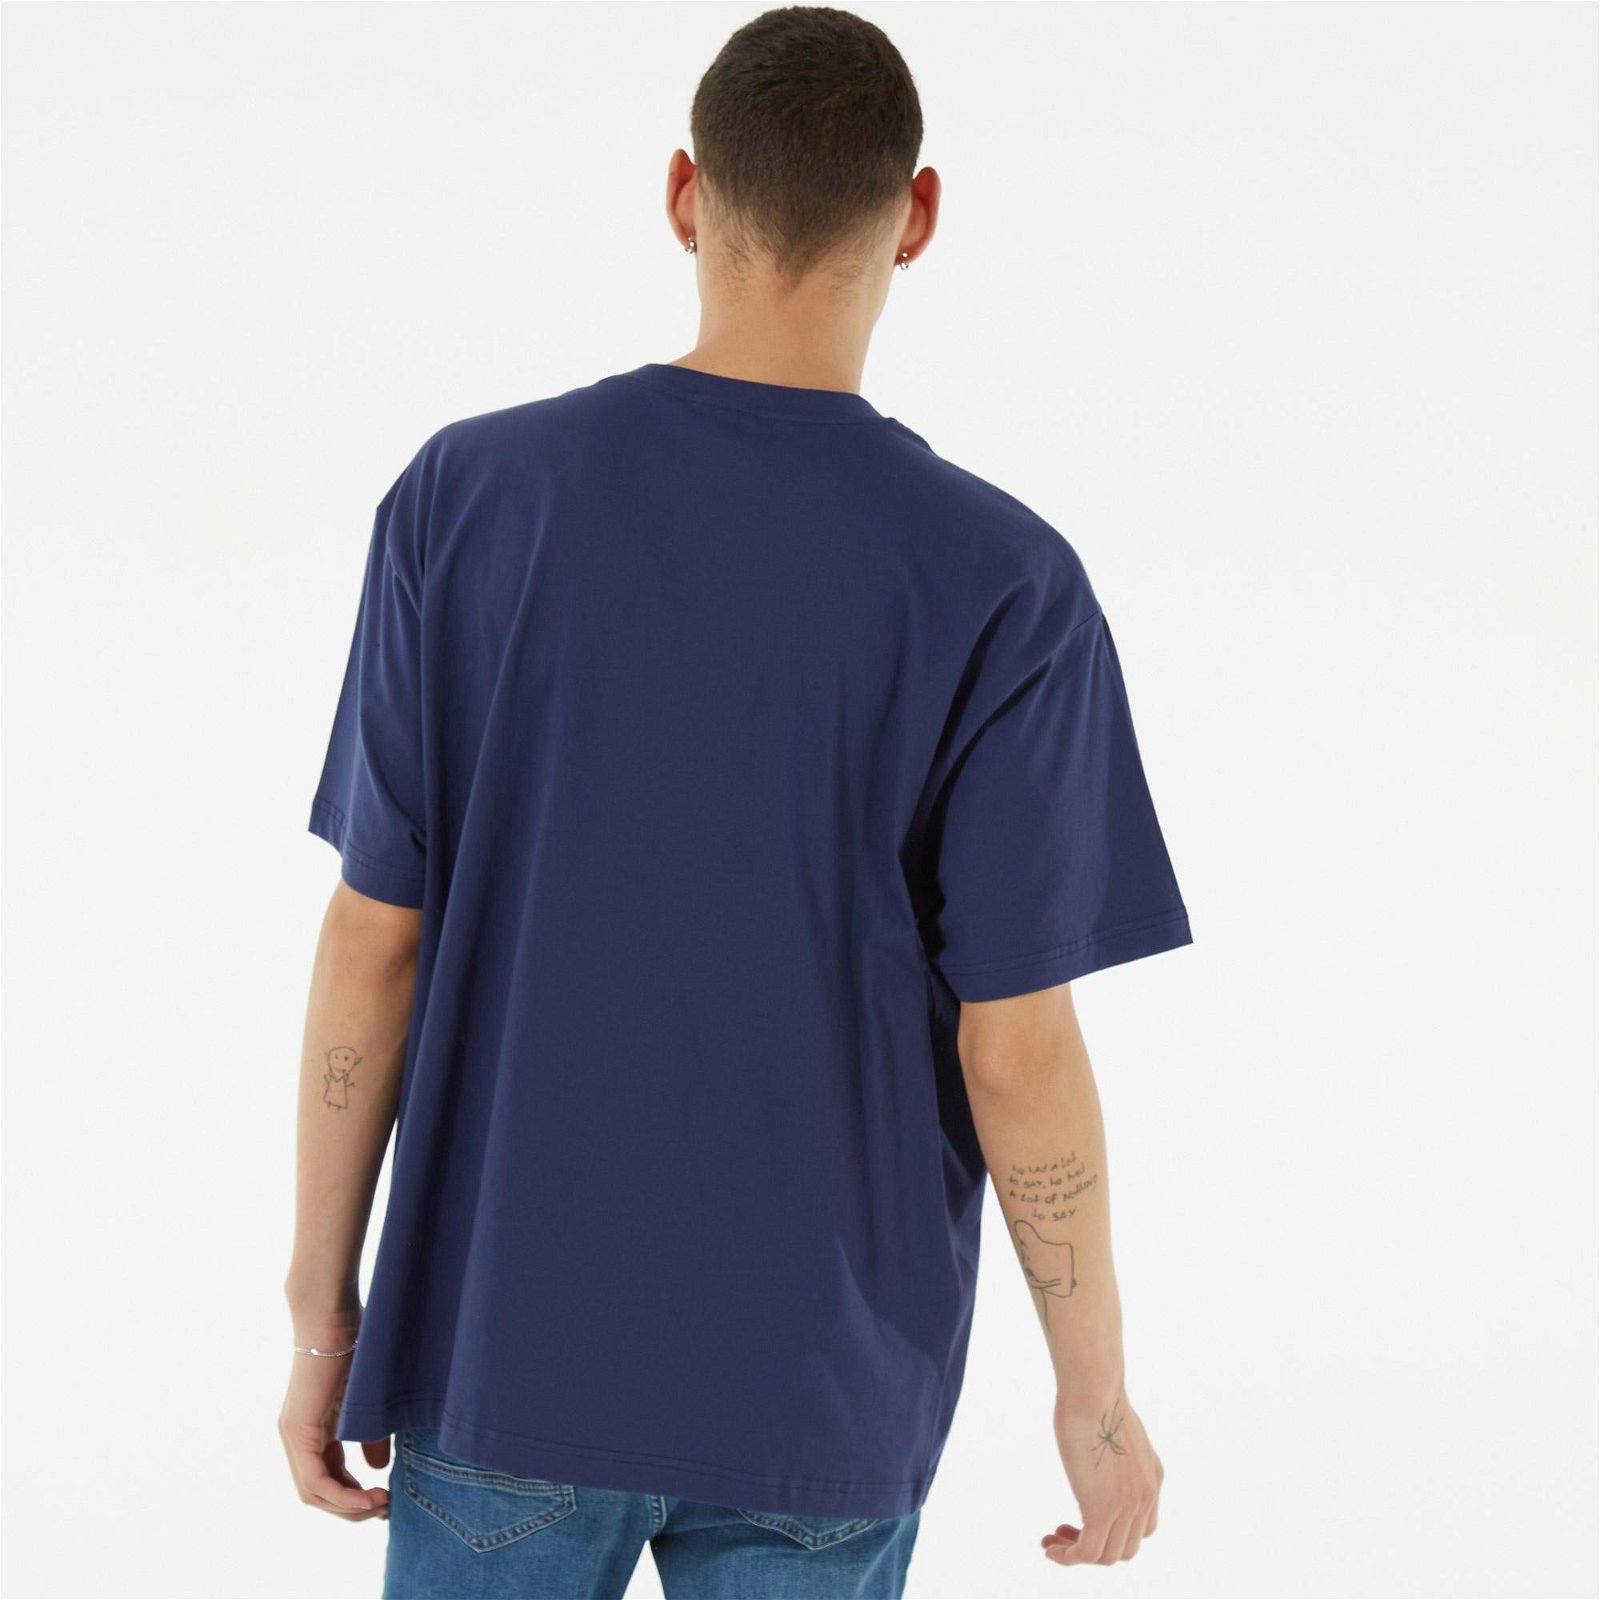 SOONTOBEANNOUNCED Logo Printed Unisex Mavi T-Shirt